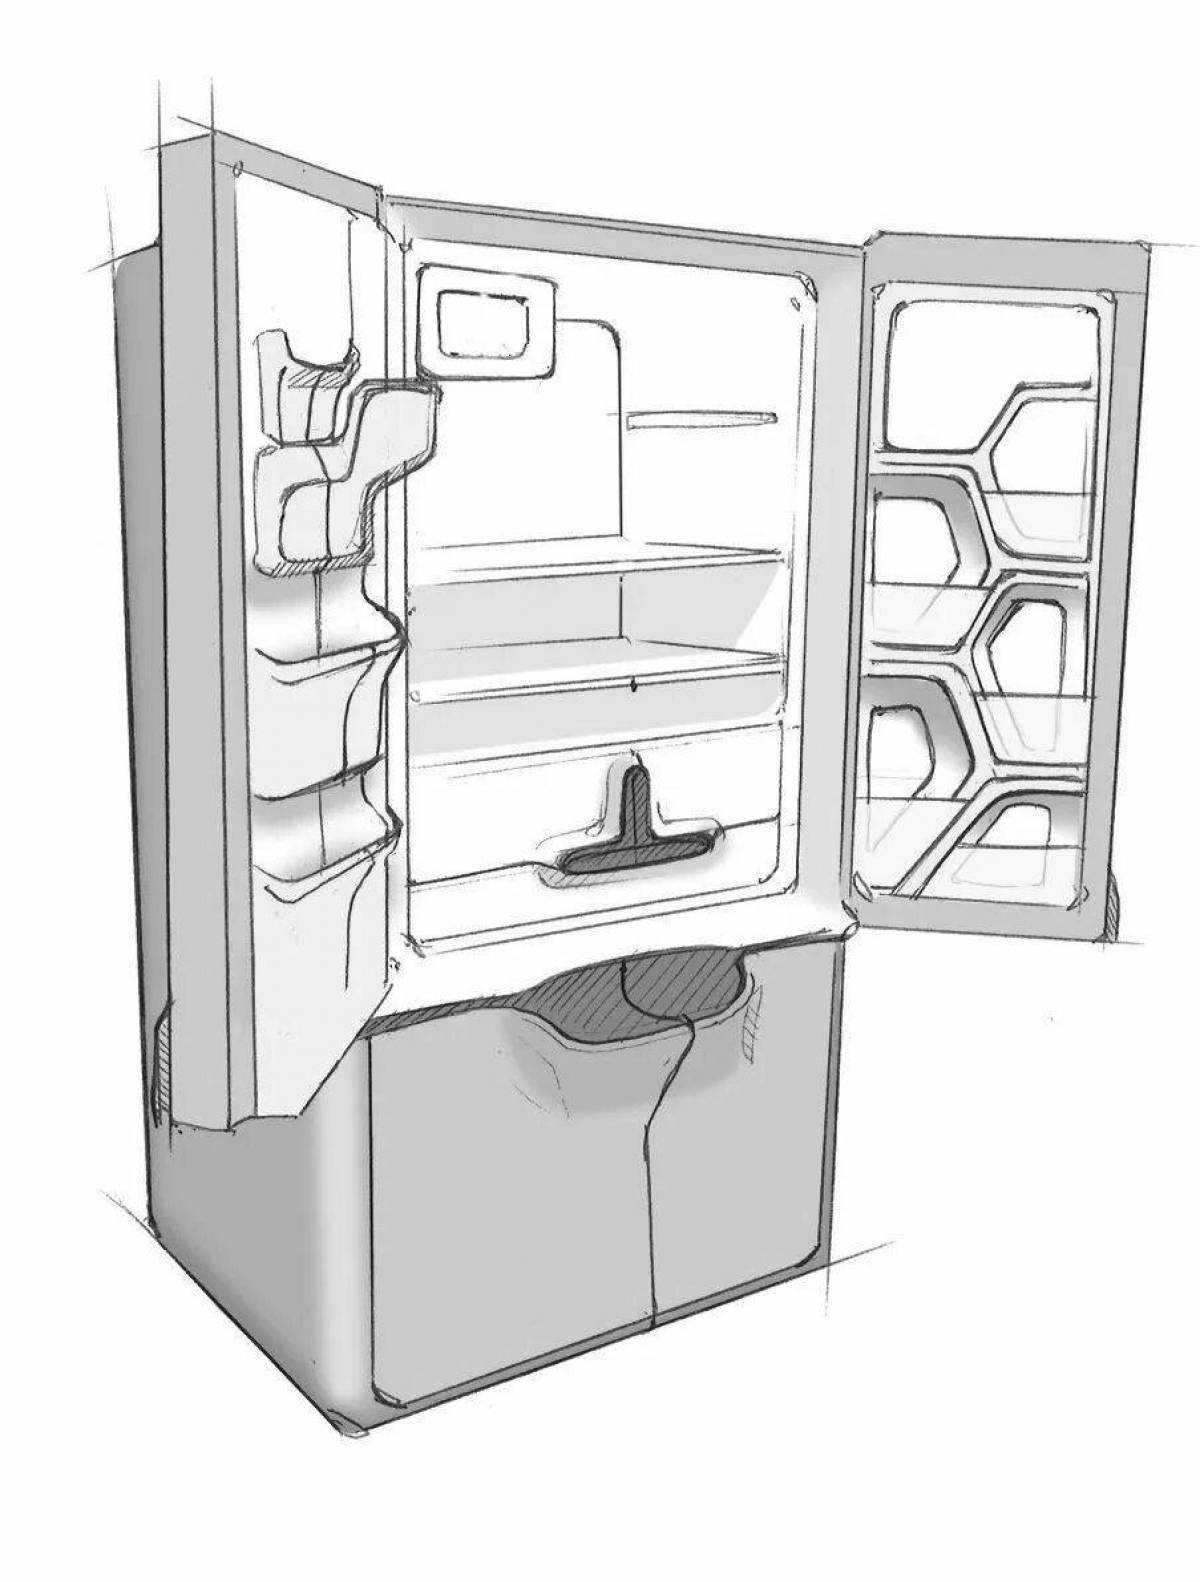 Coloring page of a convenient empty refrigerator